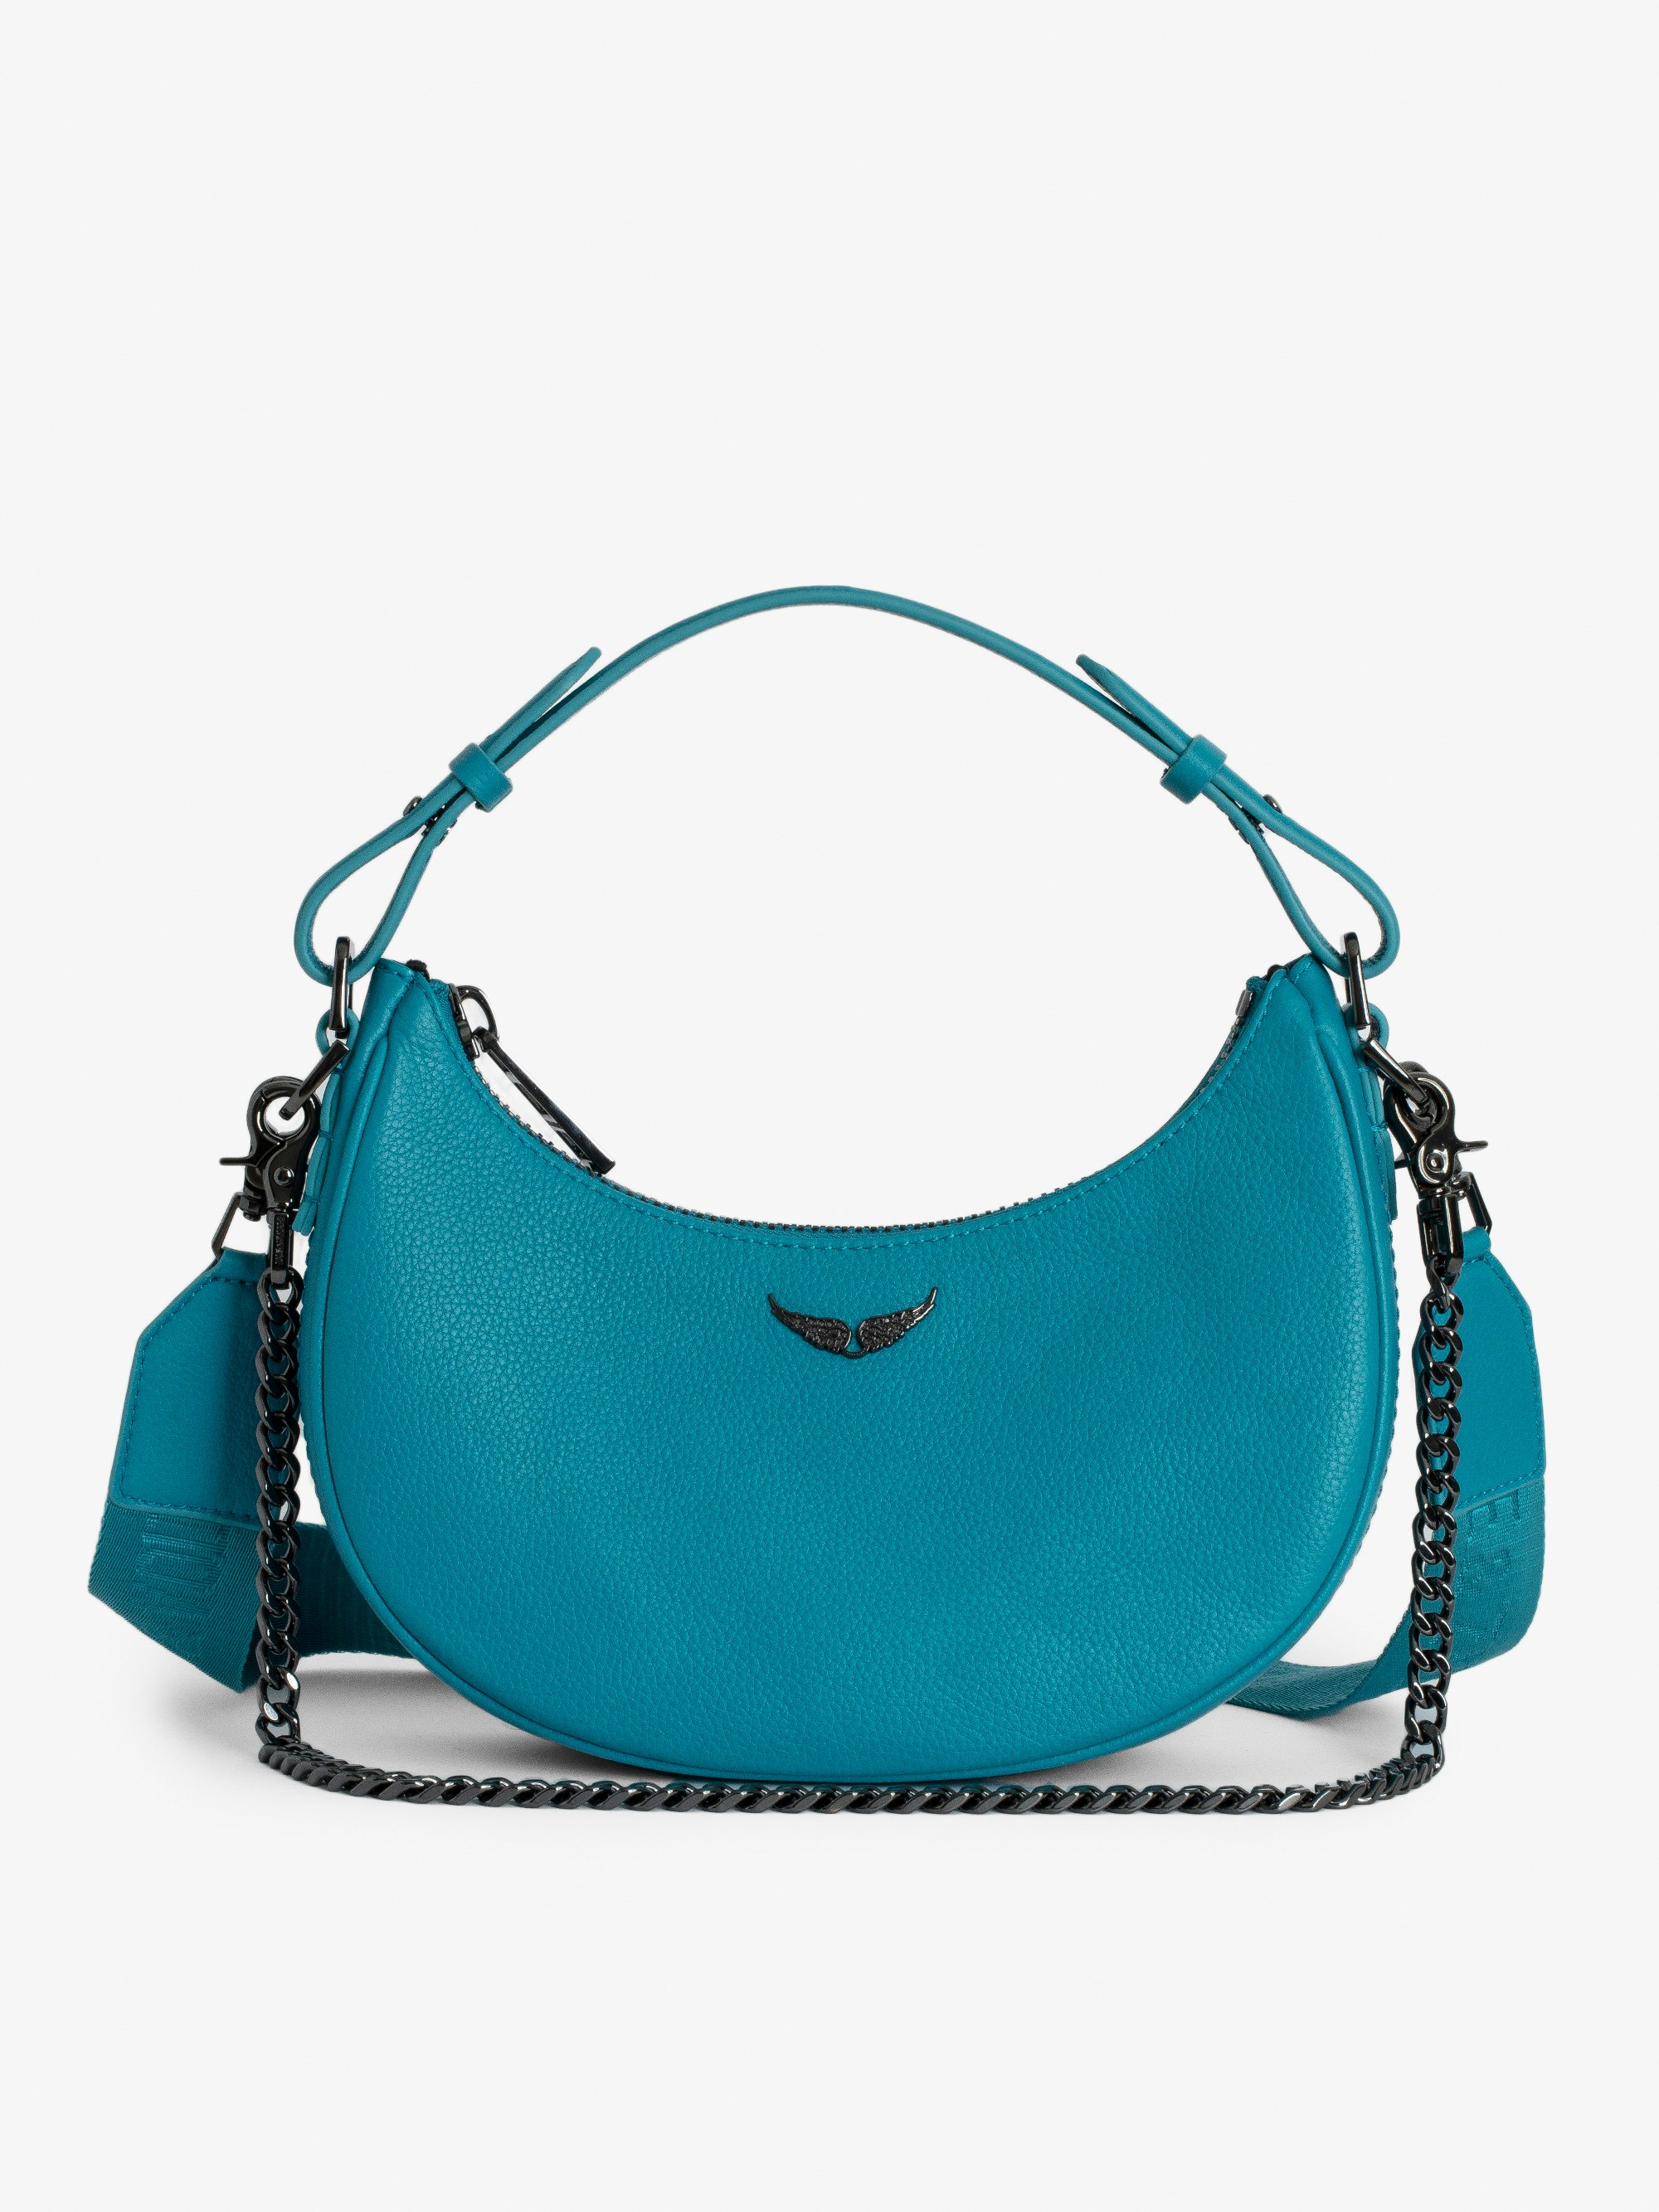 Tasche Moonrock - Halbmondförmige Handtasche aus genarbtem Leder mit Henkel, Schulterriemen, Kette und Signature-Flügeln.